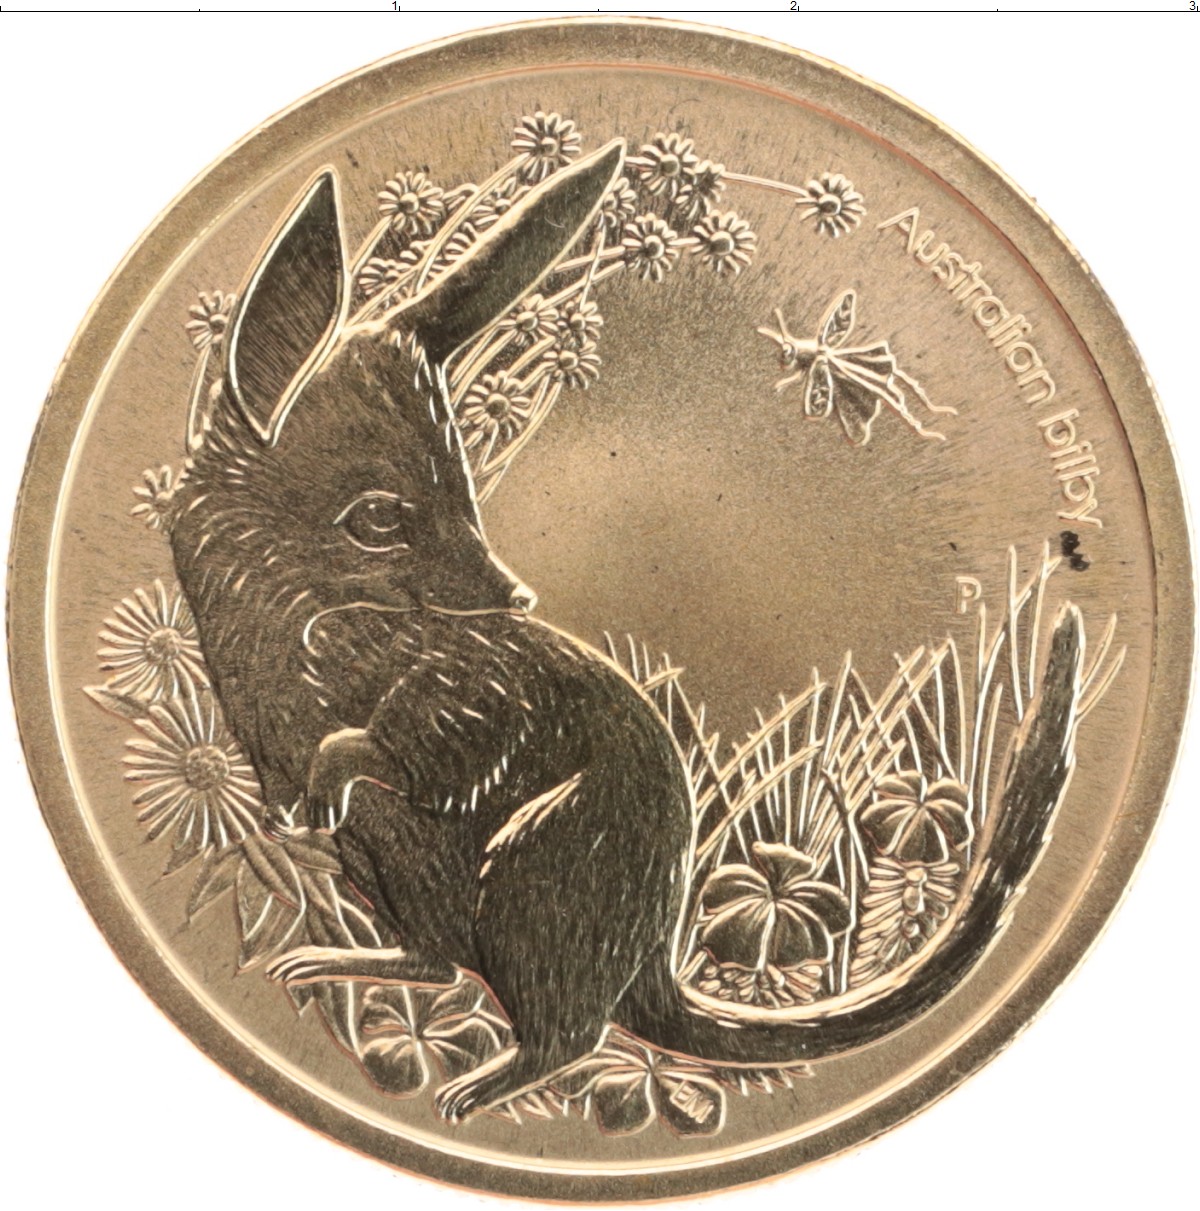 Монета австралия 1 доллар. Монета элевалент Австралия 1 доллар. Монета Австралии 1 доллар с утконосом.. Австралия 1 доллар 2011. Австралийские монеты с животными.